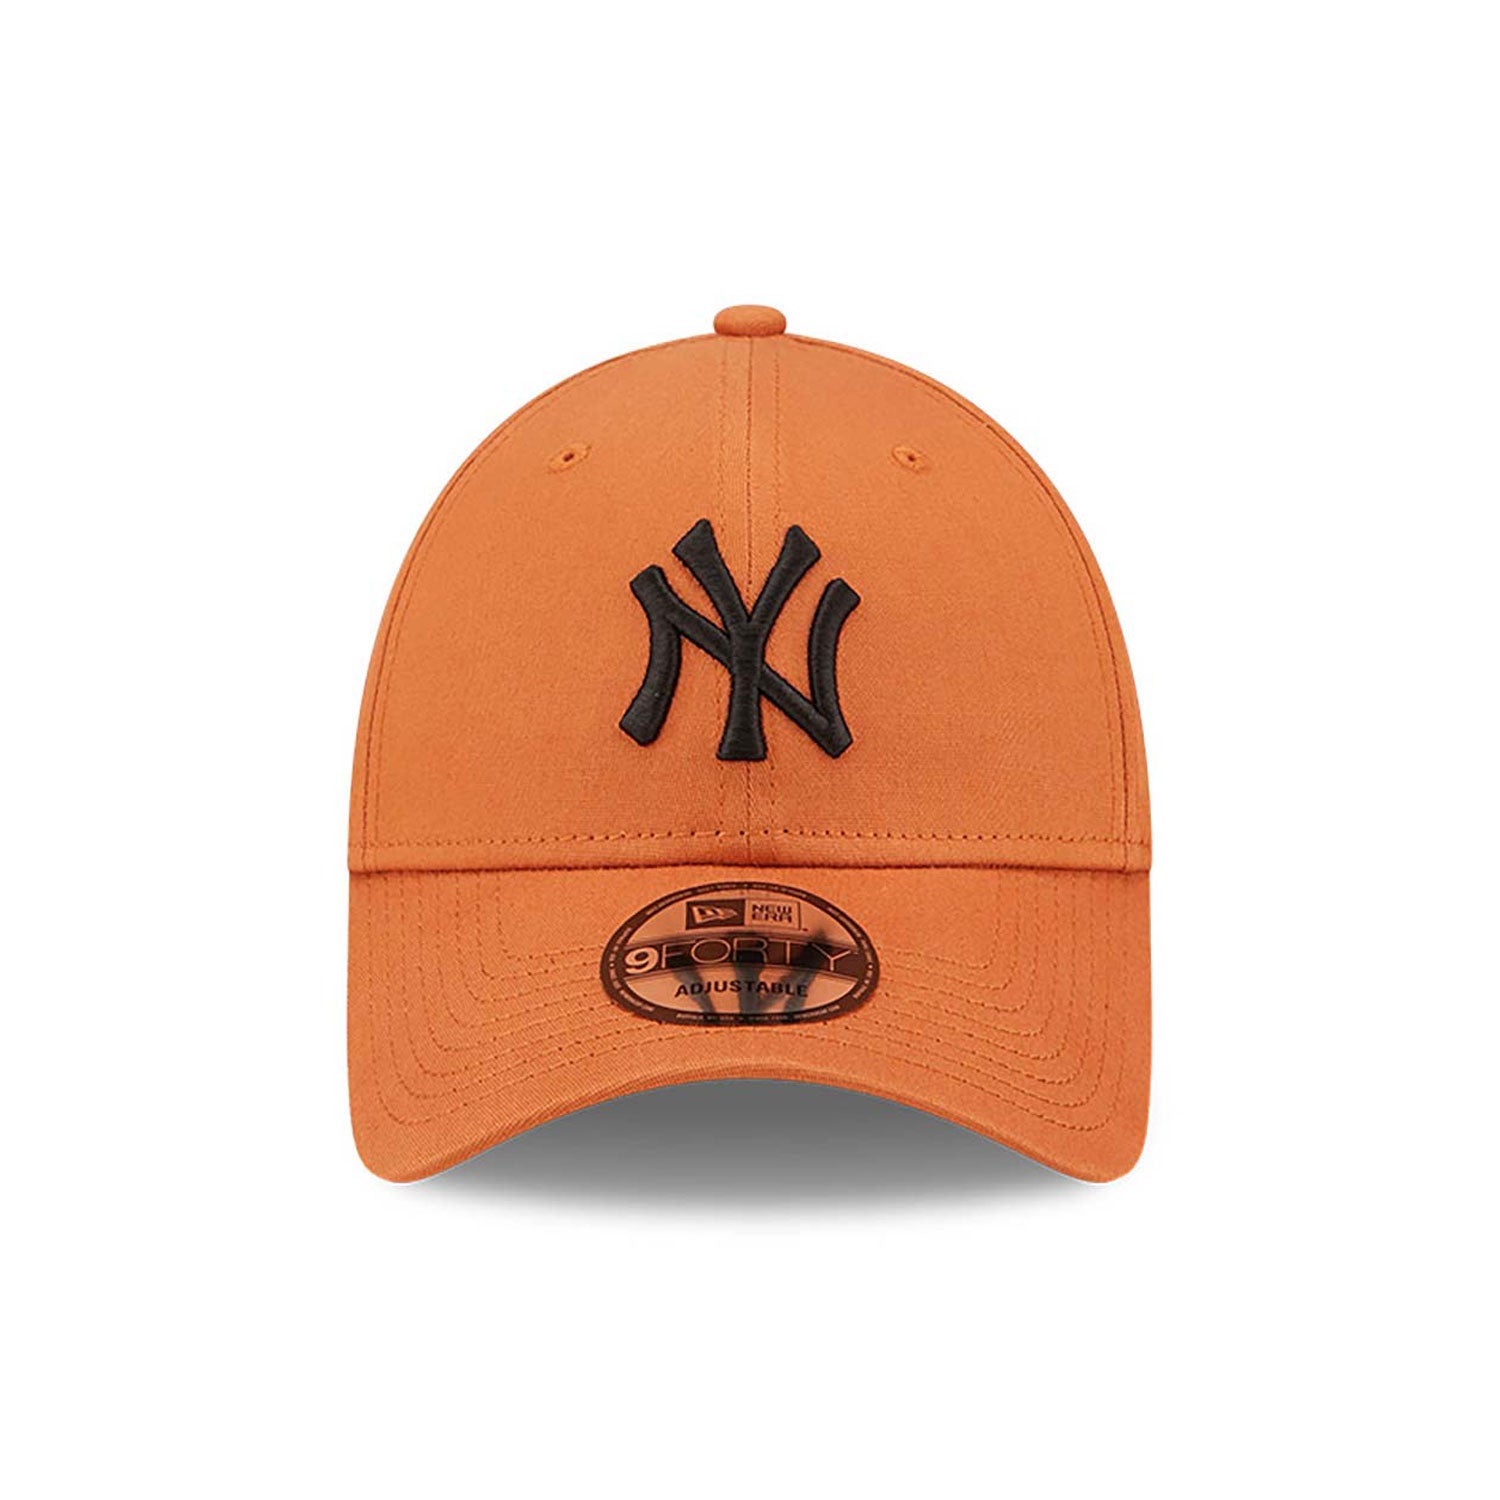 39Thirty League Essential - New York Yankees Orange/Black